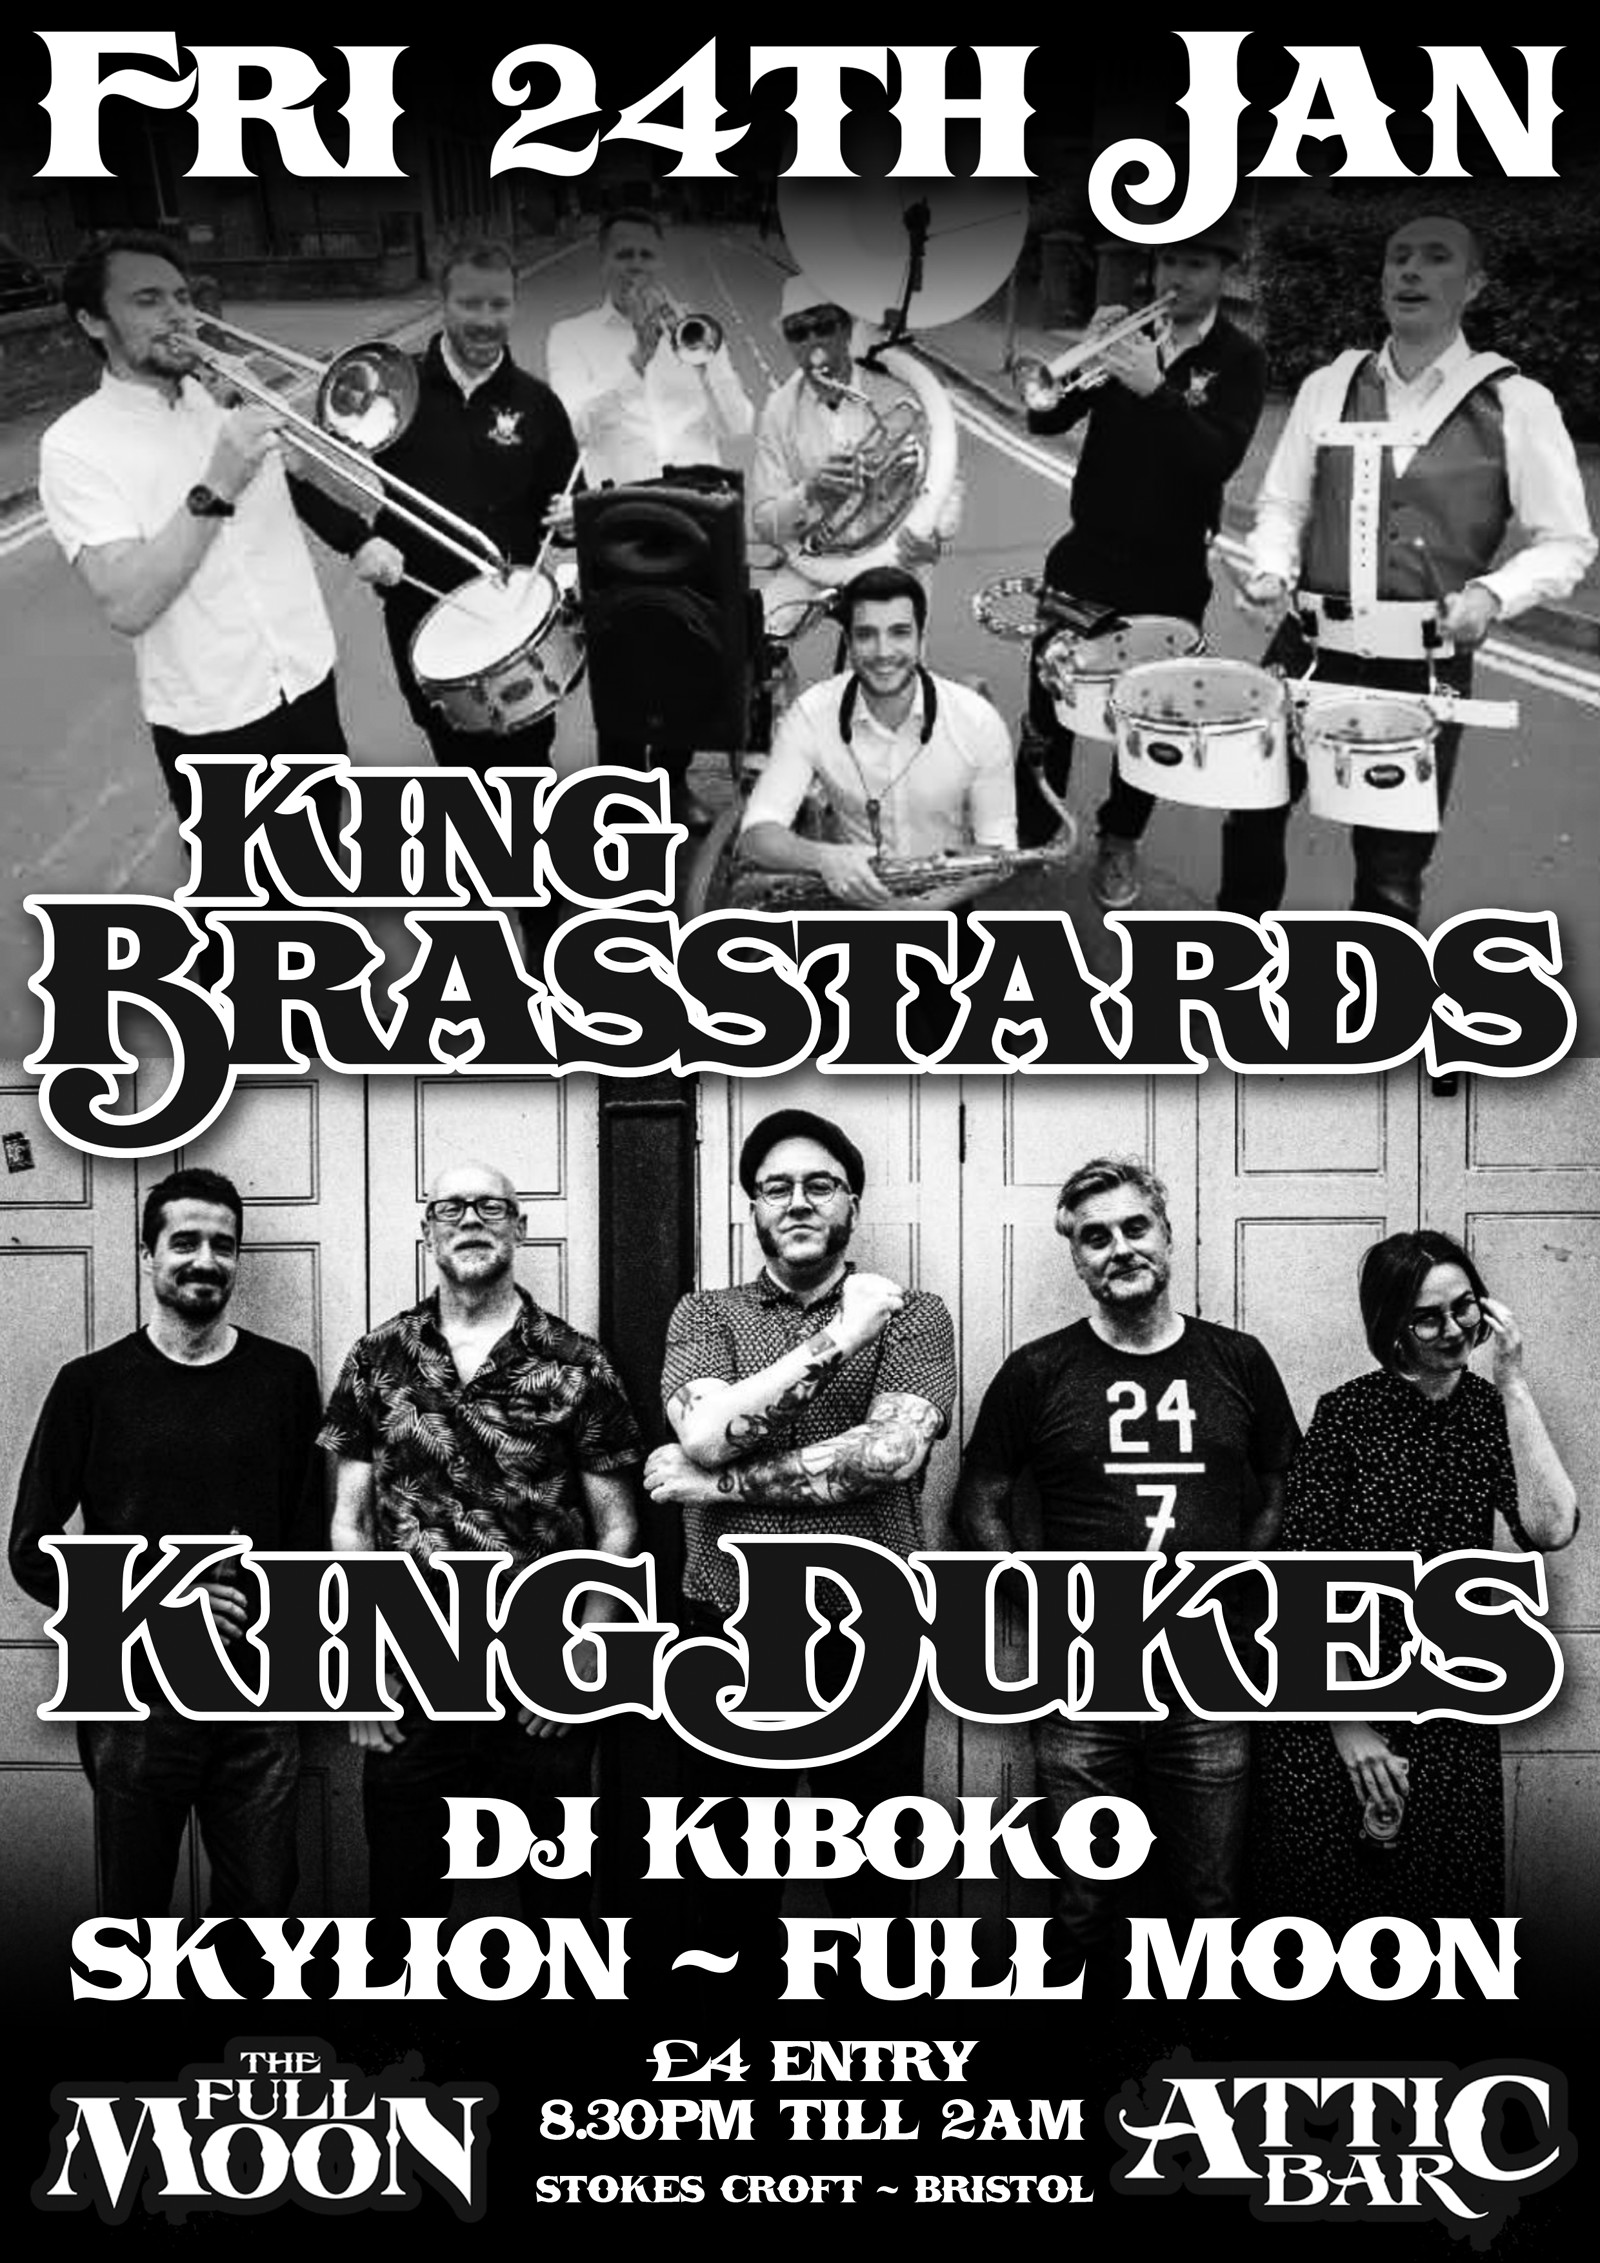 King Brasstards / King Dukes at The Attic Bar